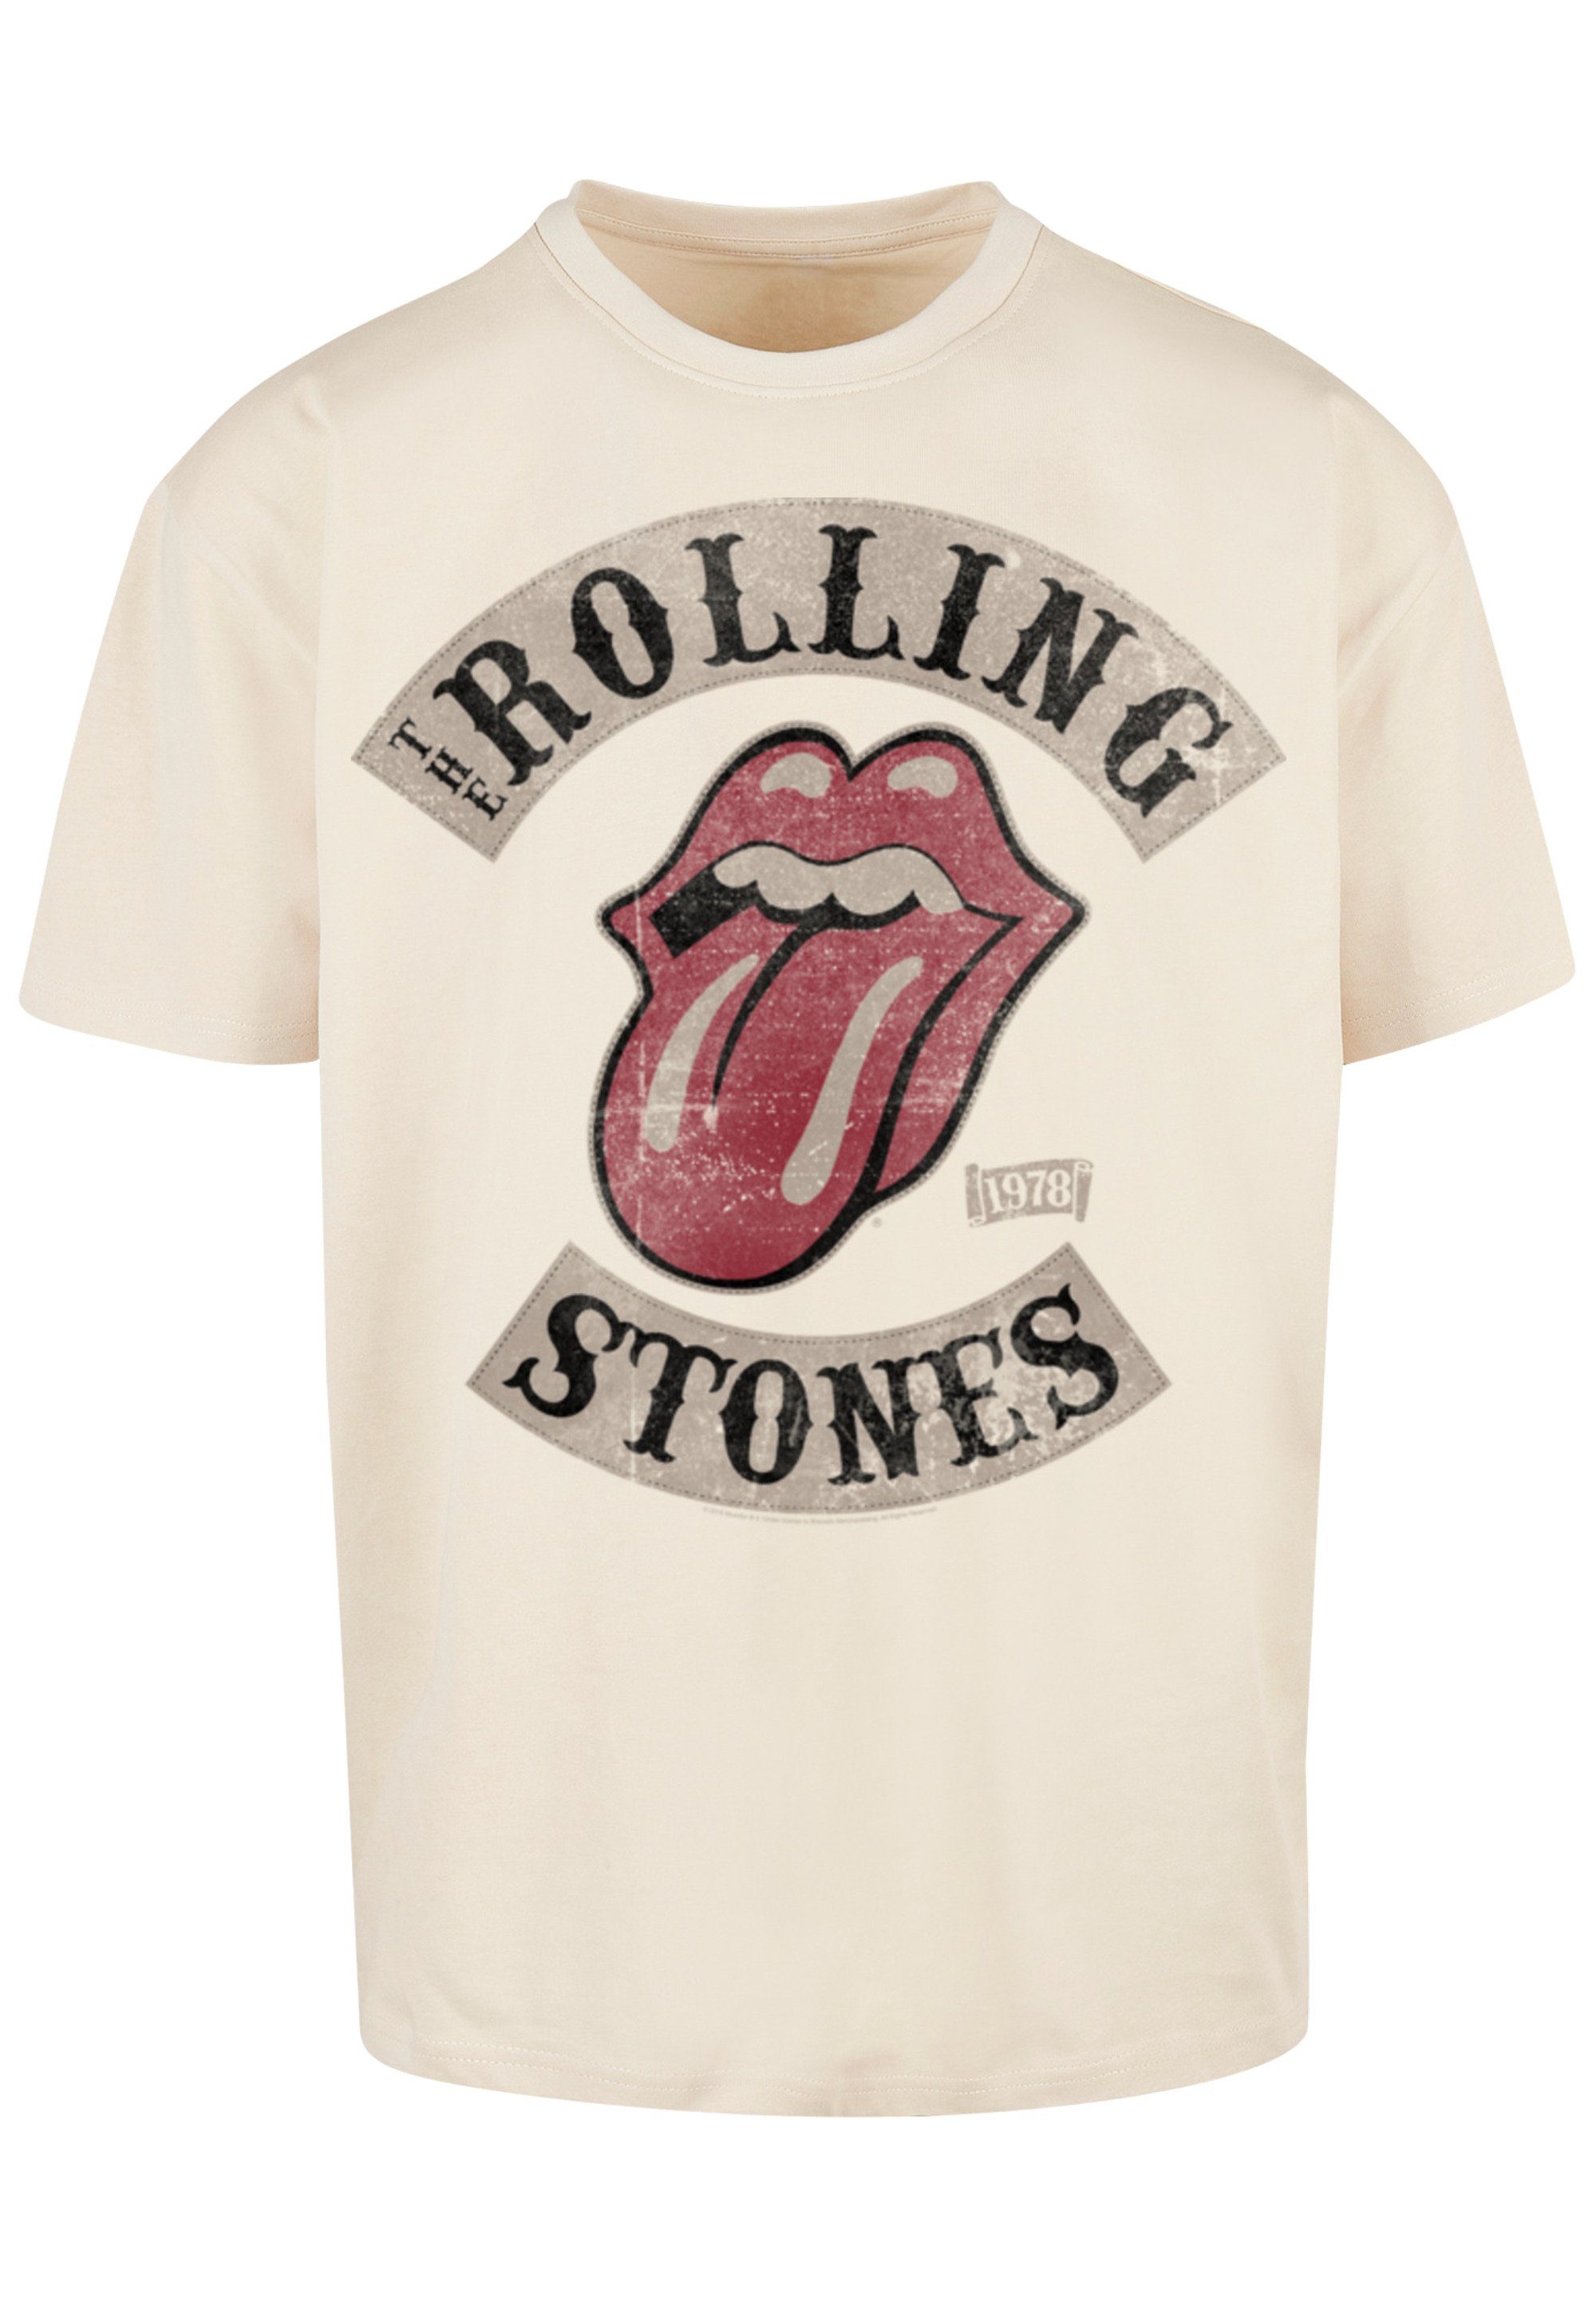 '78 SIZE Rolling T-Shirt PLUS F4NT4STIC Print sand The Tour Stones